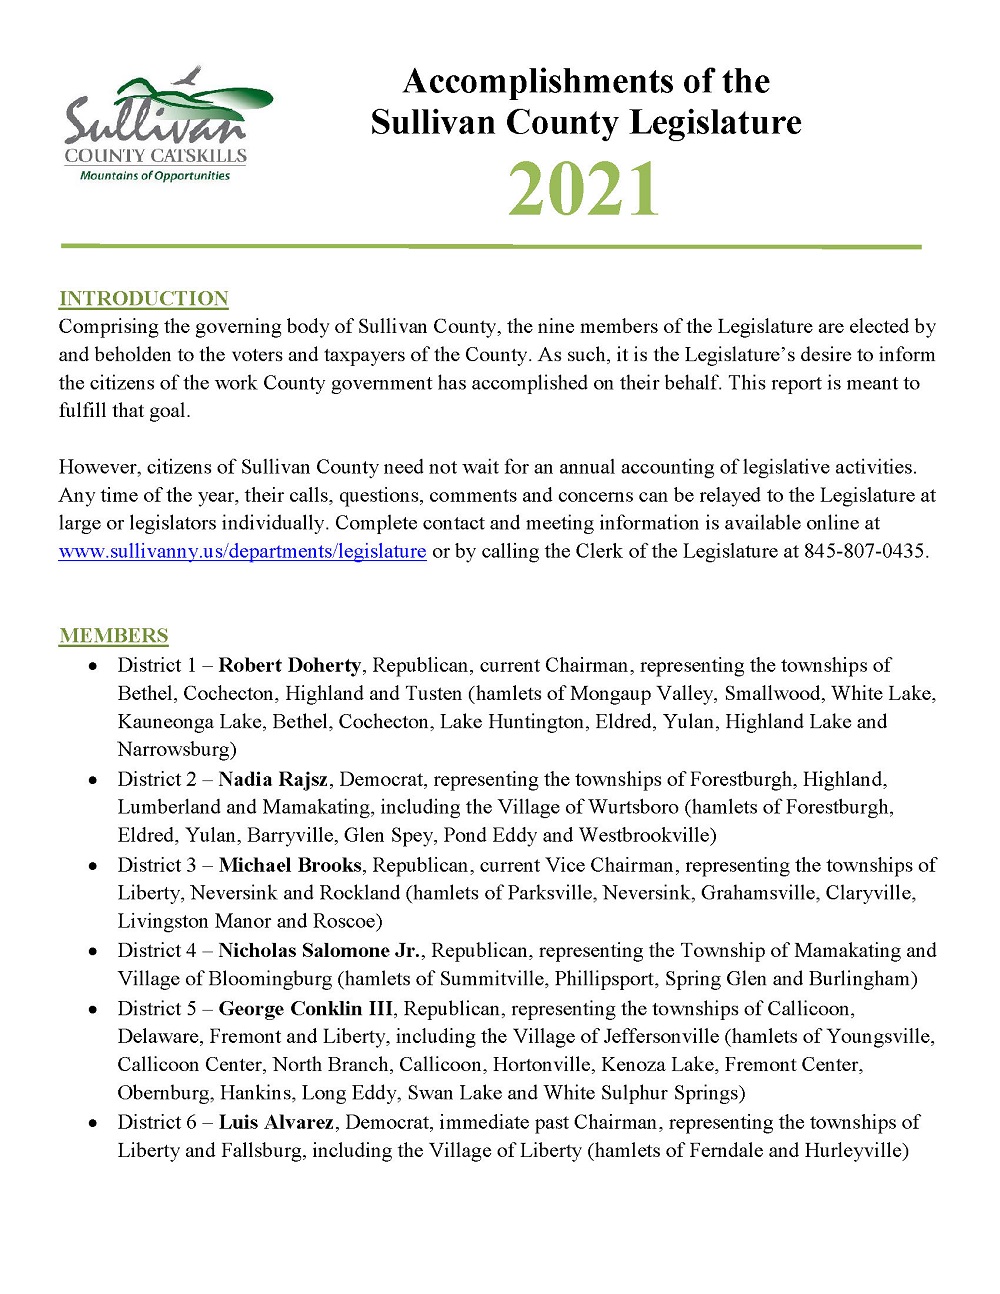 2021LegislatureAccomplishments_Page_1.jpg